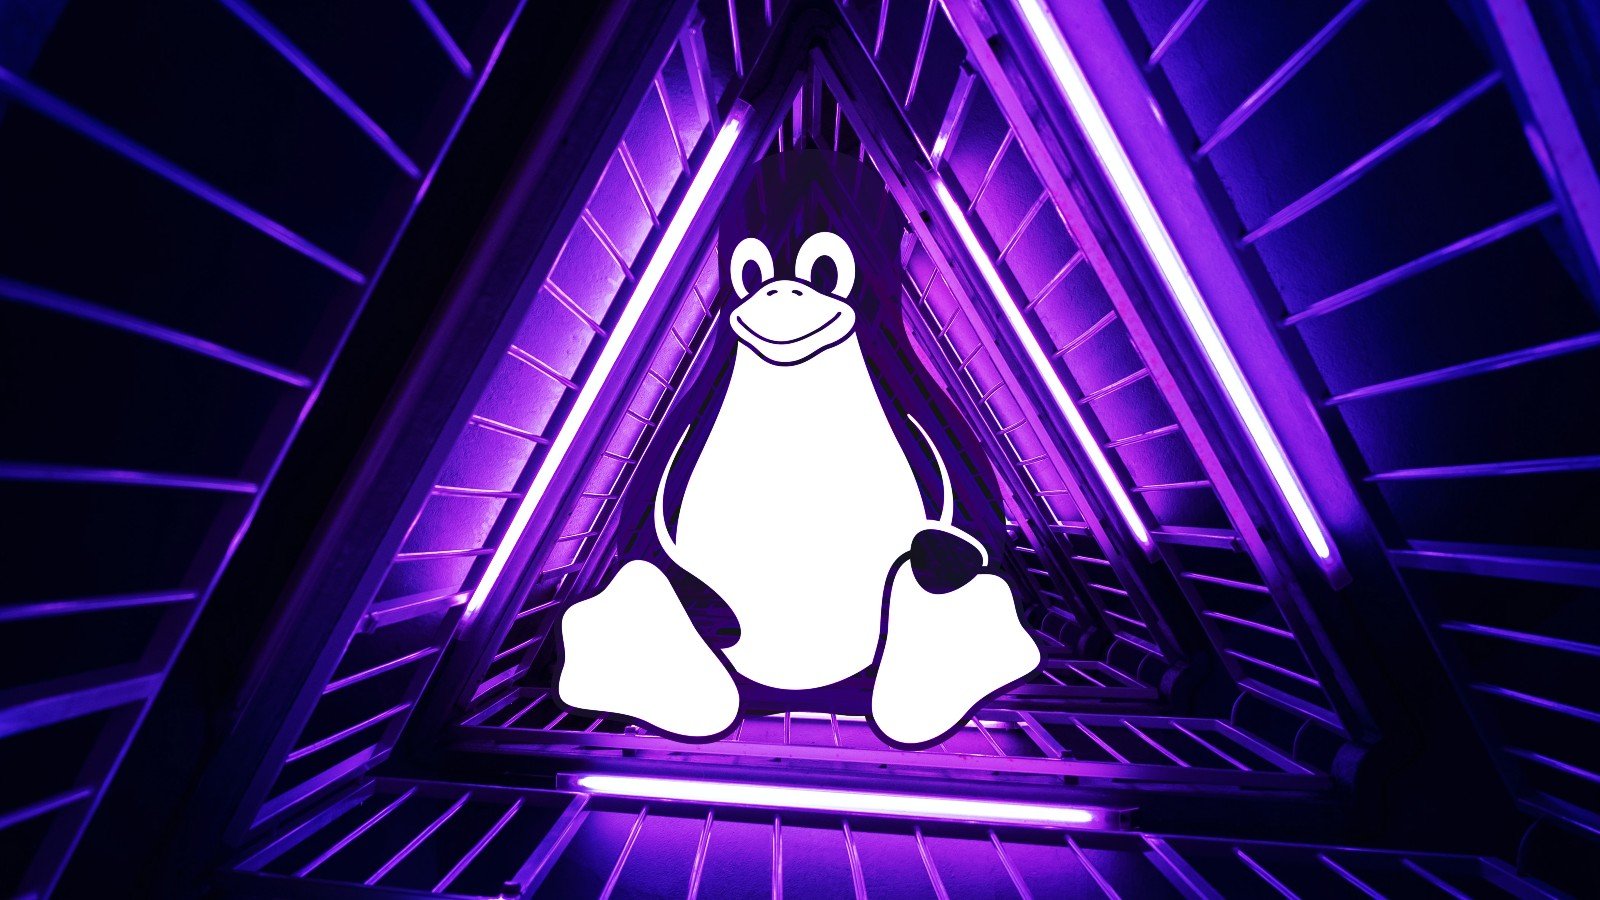 Linux Systems Under Siege: DinodasRAT Malware Targets Red Hat, Ubuntu